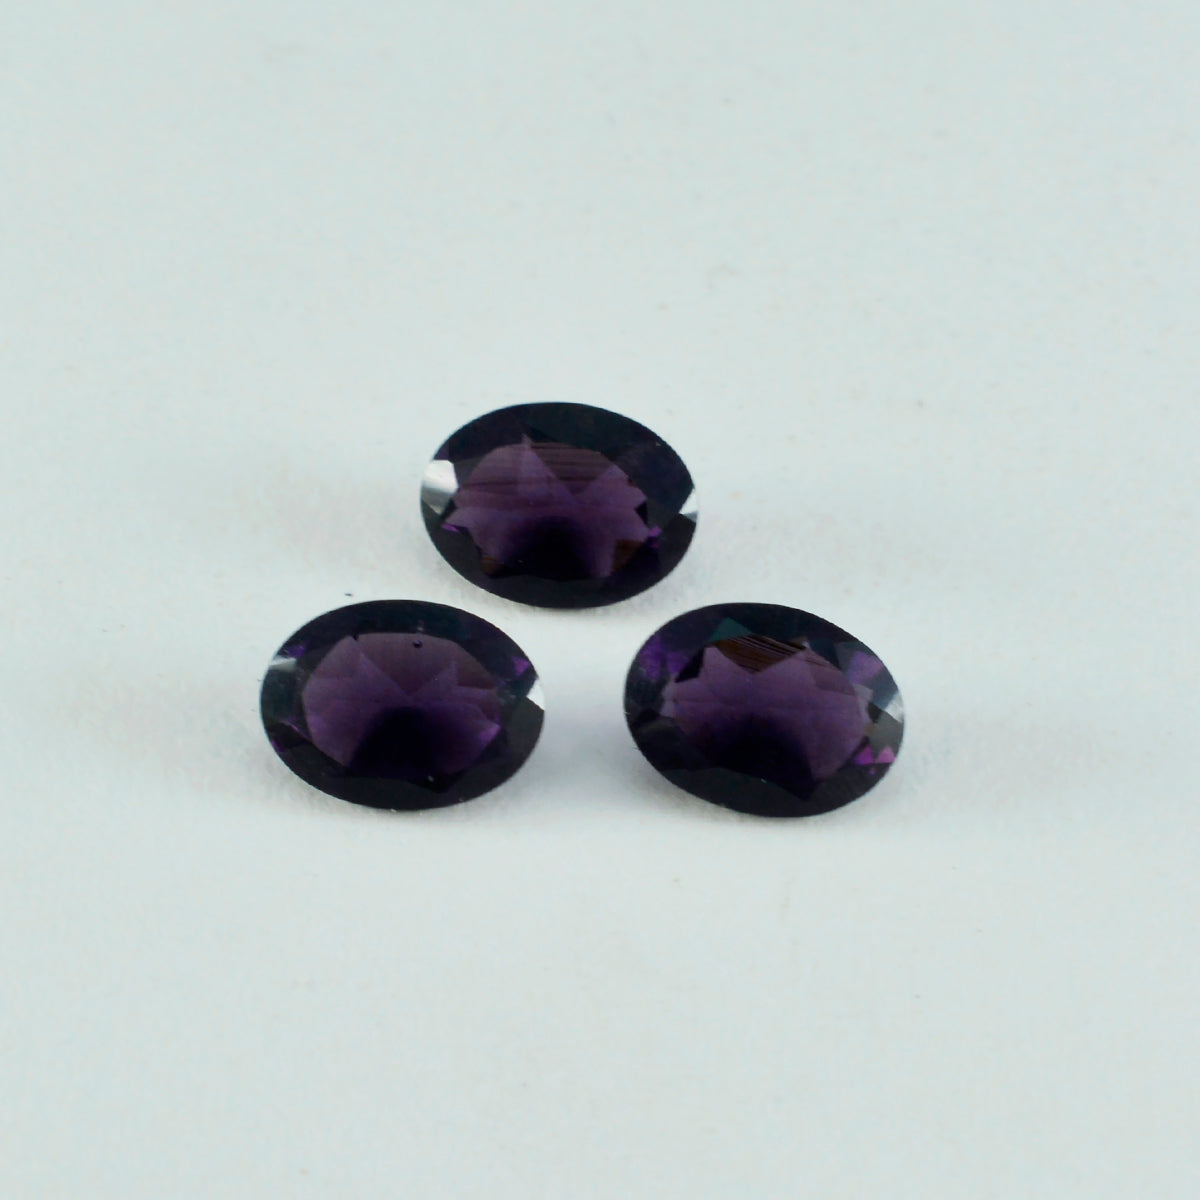 Riyogems 1PC Purple Amethyst CZ Faceted 7x9 mm Oval Shape startling Quality Stone